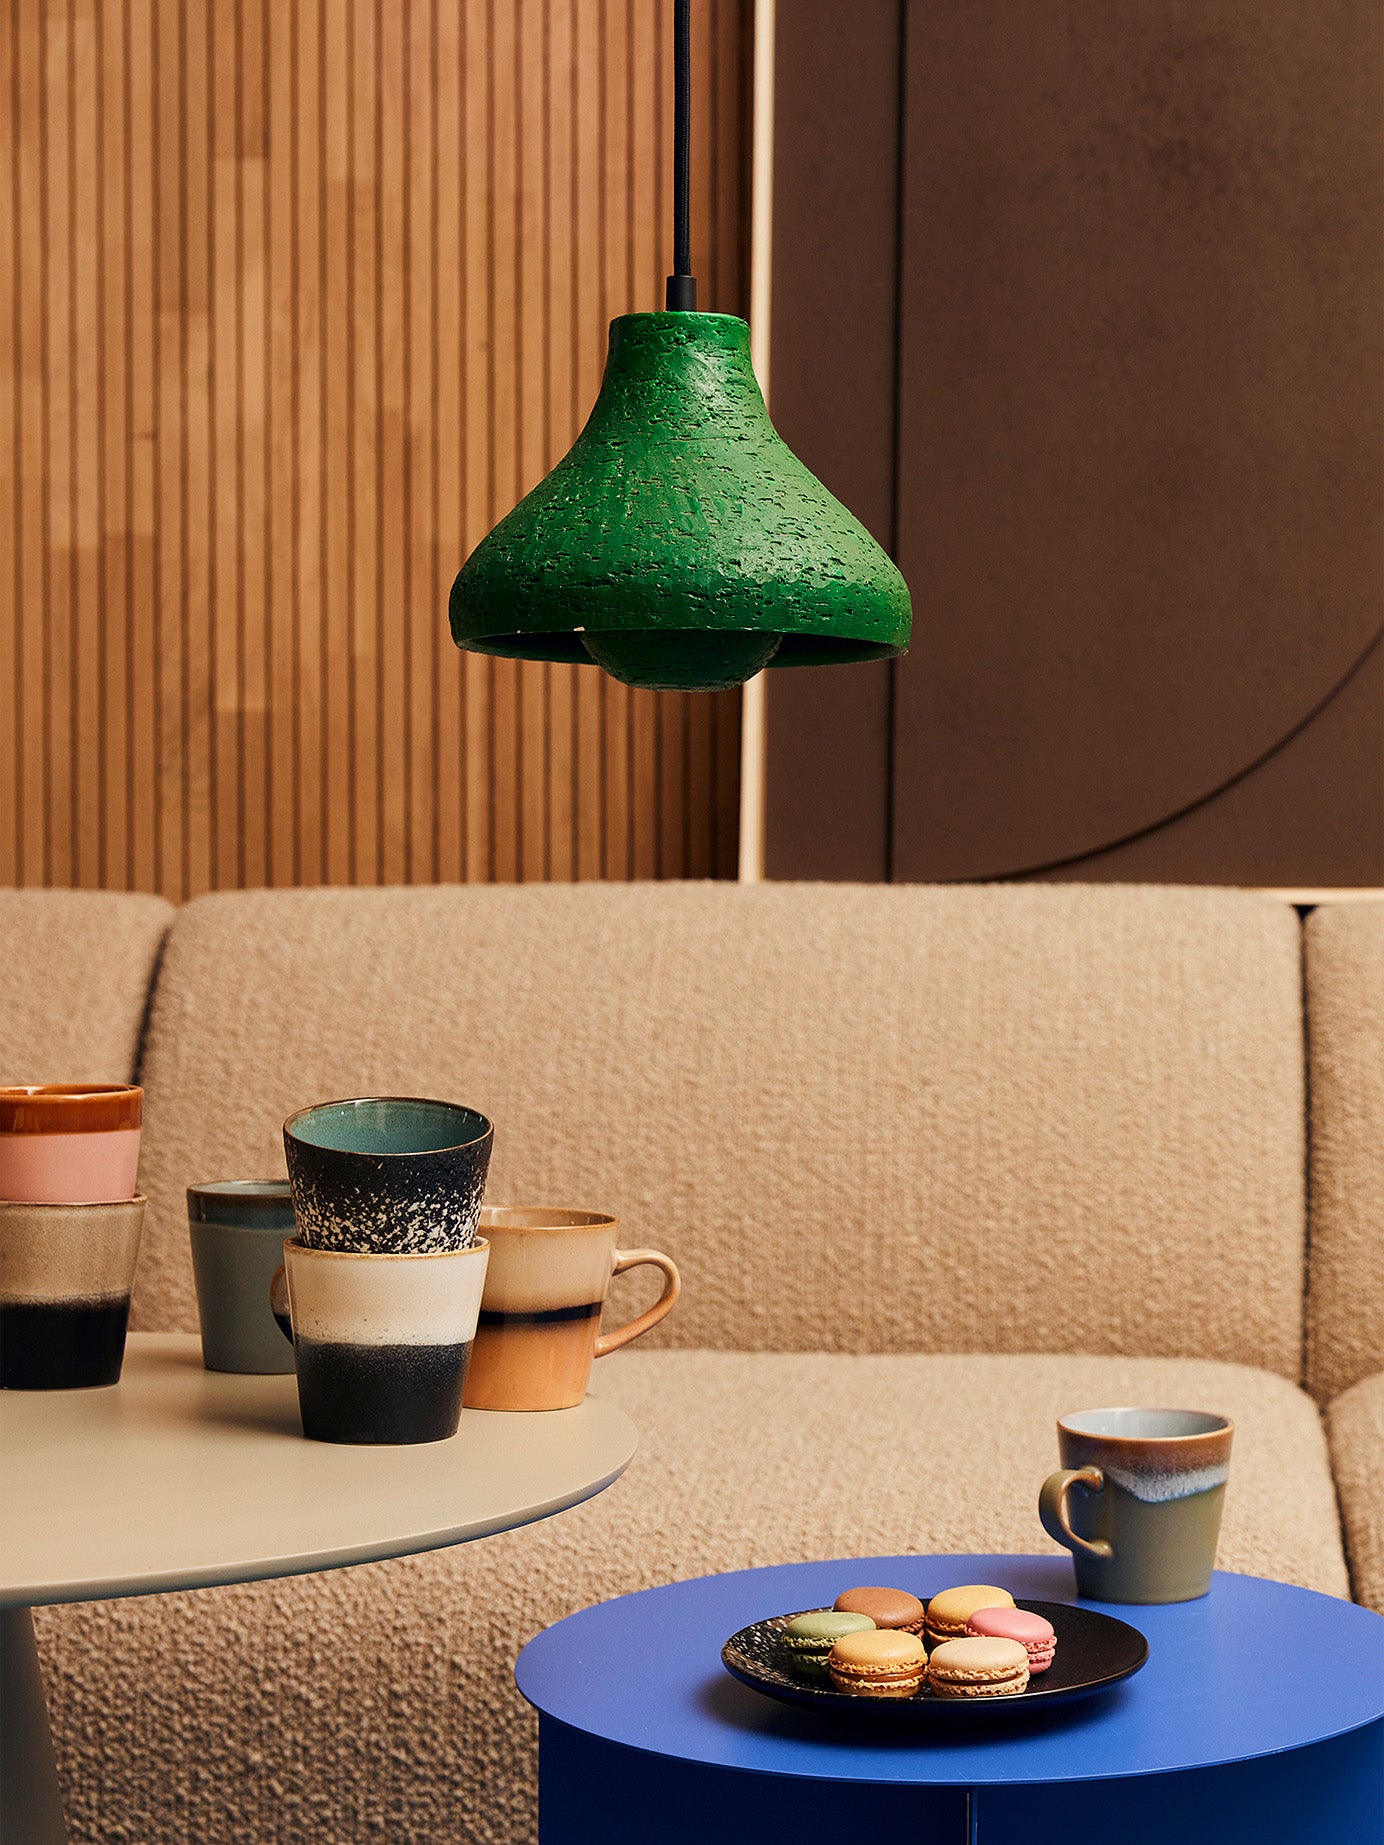 70s ceramics - Kaffee Becher Oberon (6er-Set)